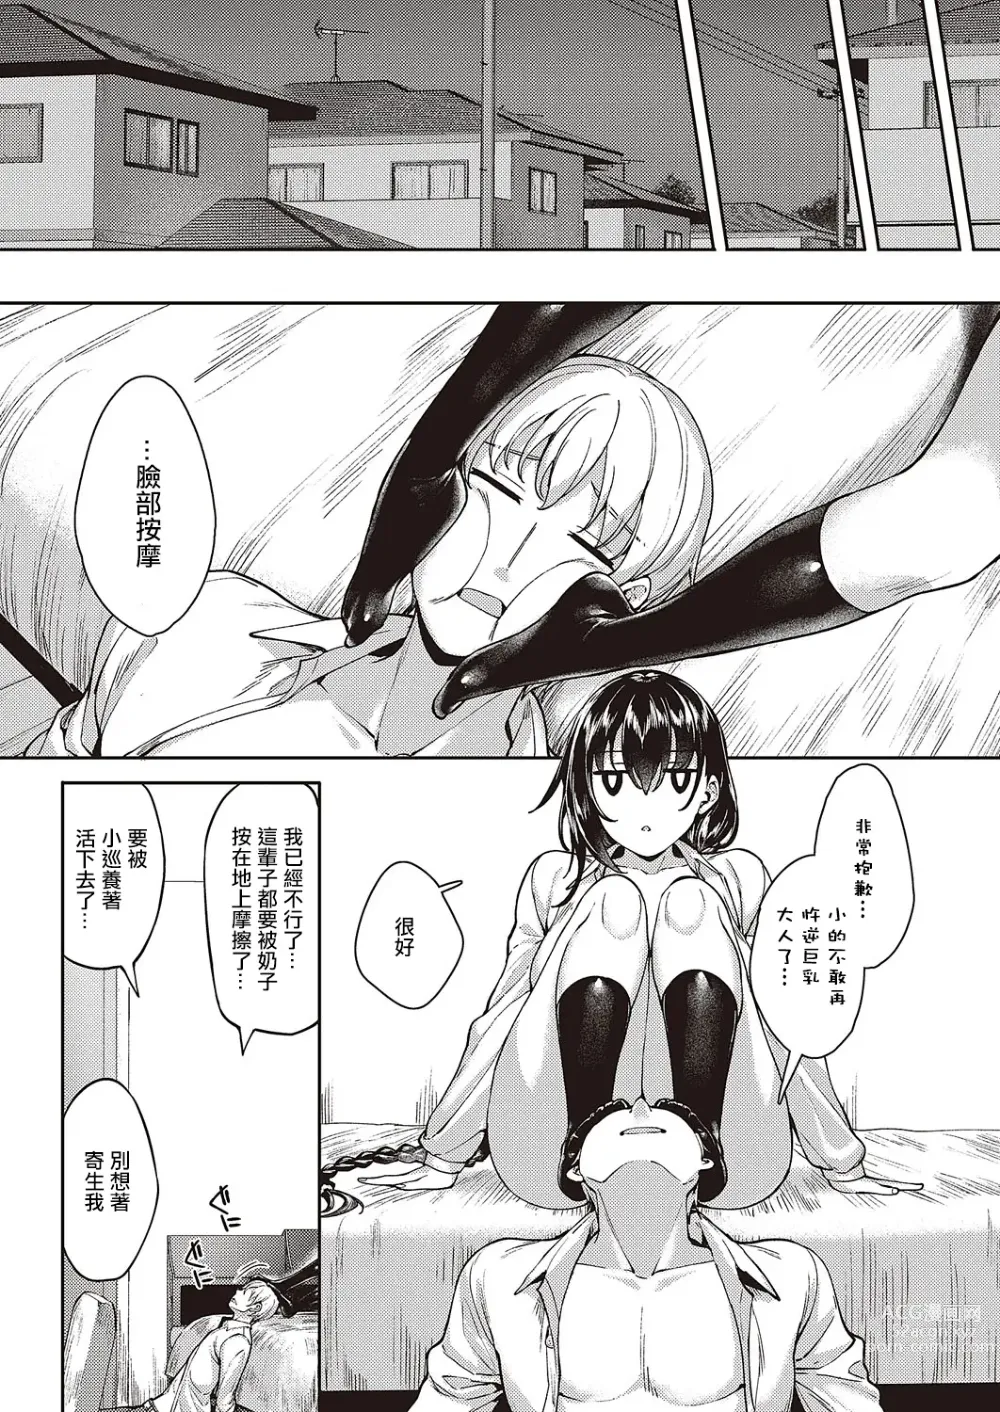 Page 27 of manga めぐりどころ 1歩